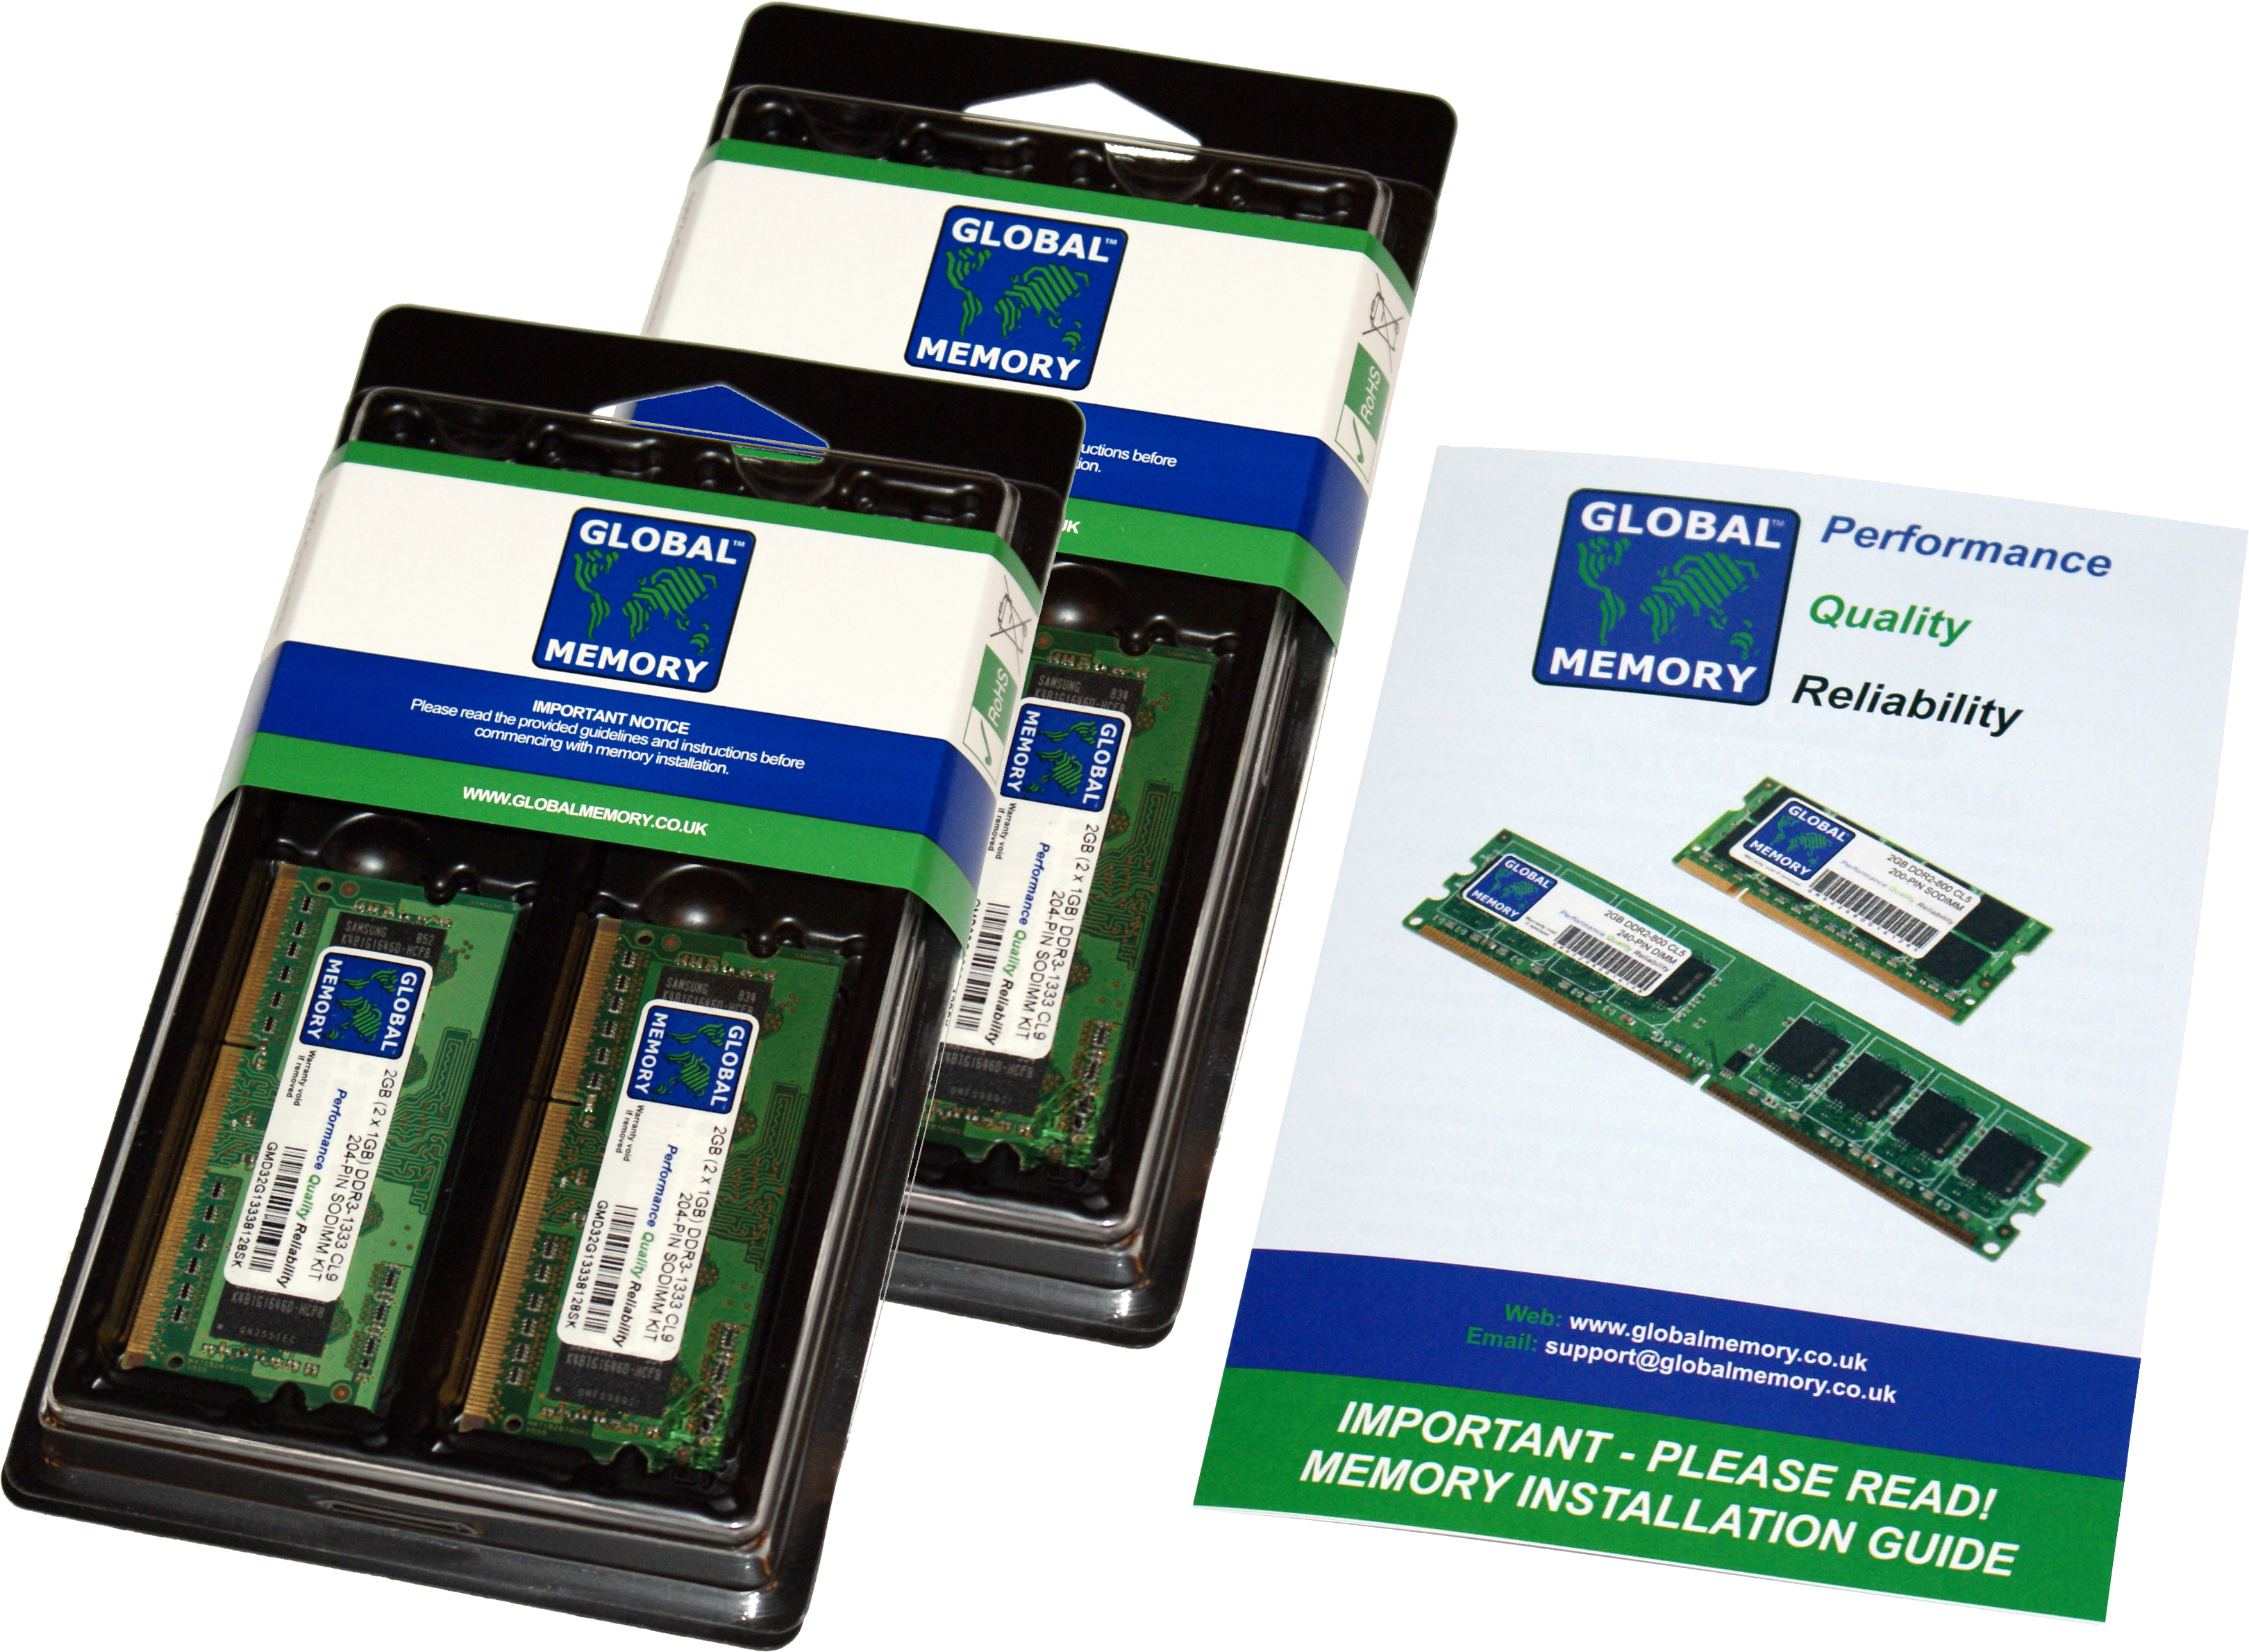 32GB (4 x 8GB) DDR4 2666MHz PC4-21300 260-PIN SODIMM MEMORY RAM KIT FOR DELL LAPTOPS/NOTEBOOKS